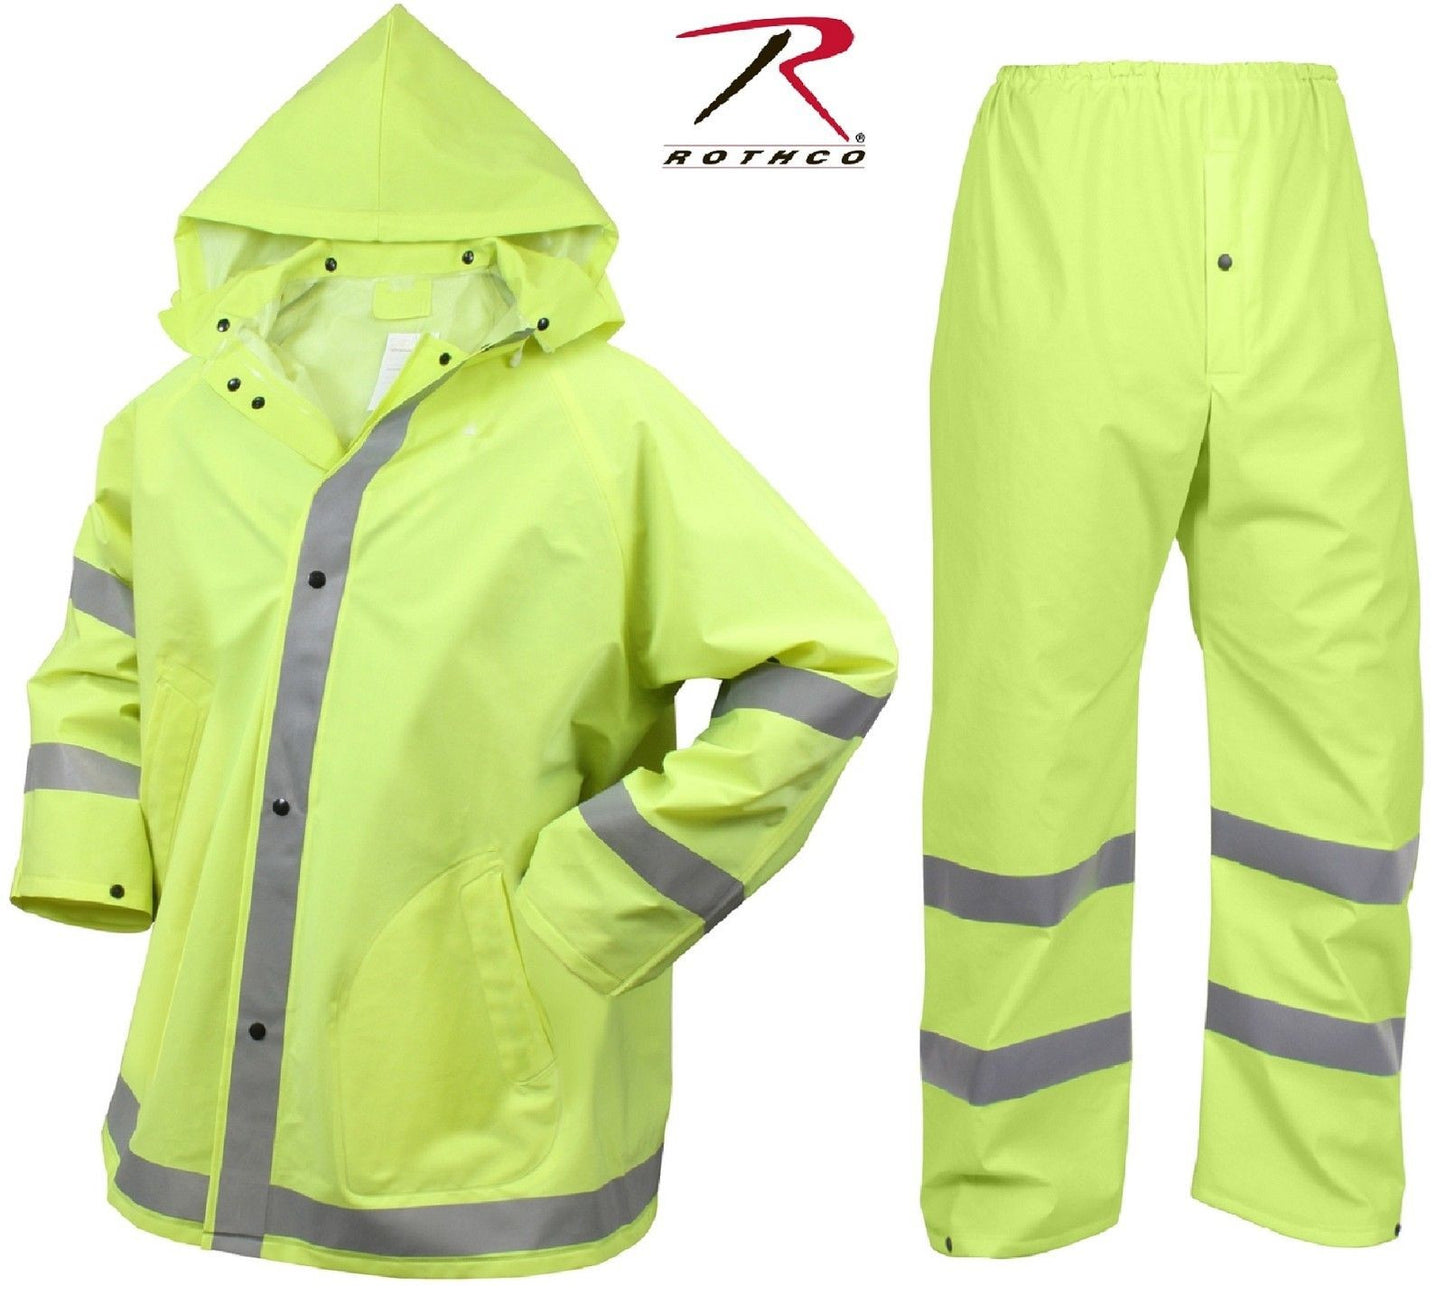 Waterproof Reflective Safety Rain Suit Jacket & Pants w/ Detachable Hood